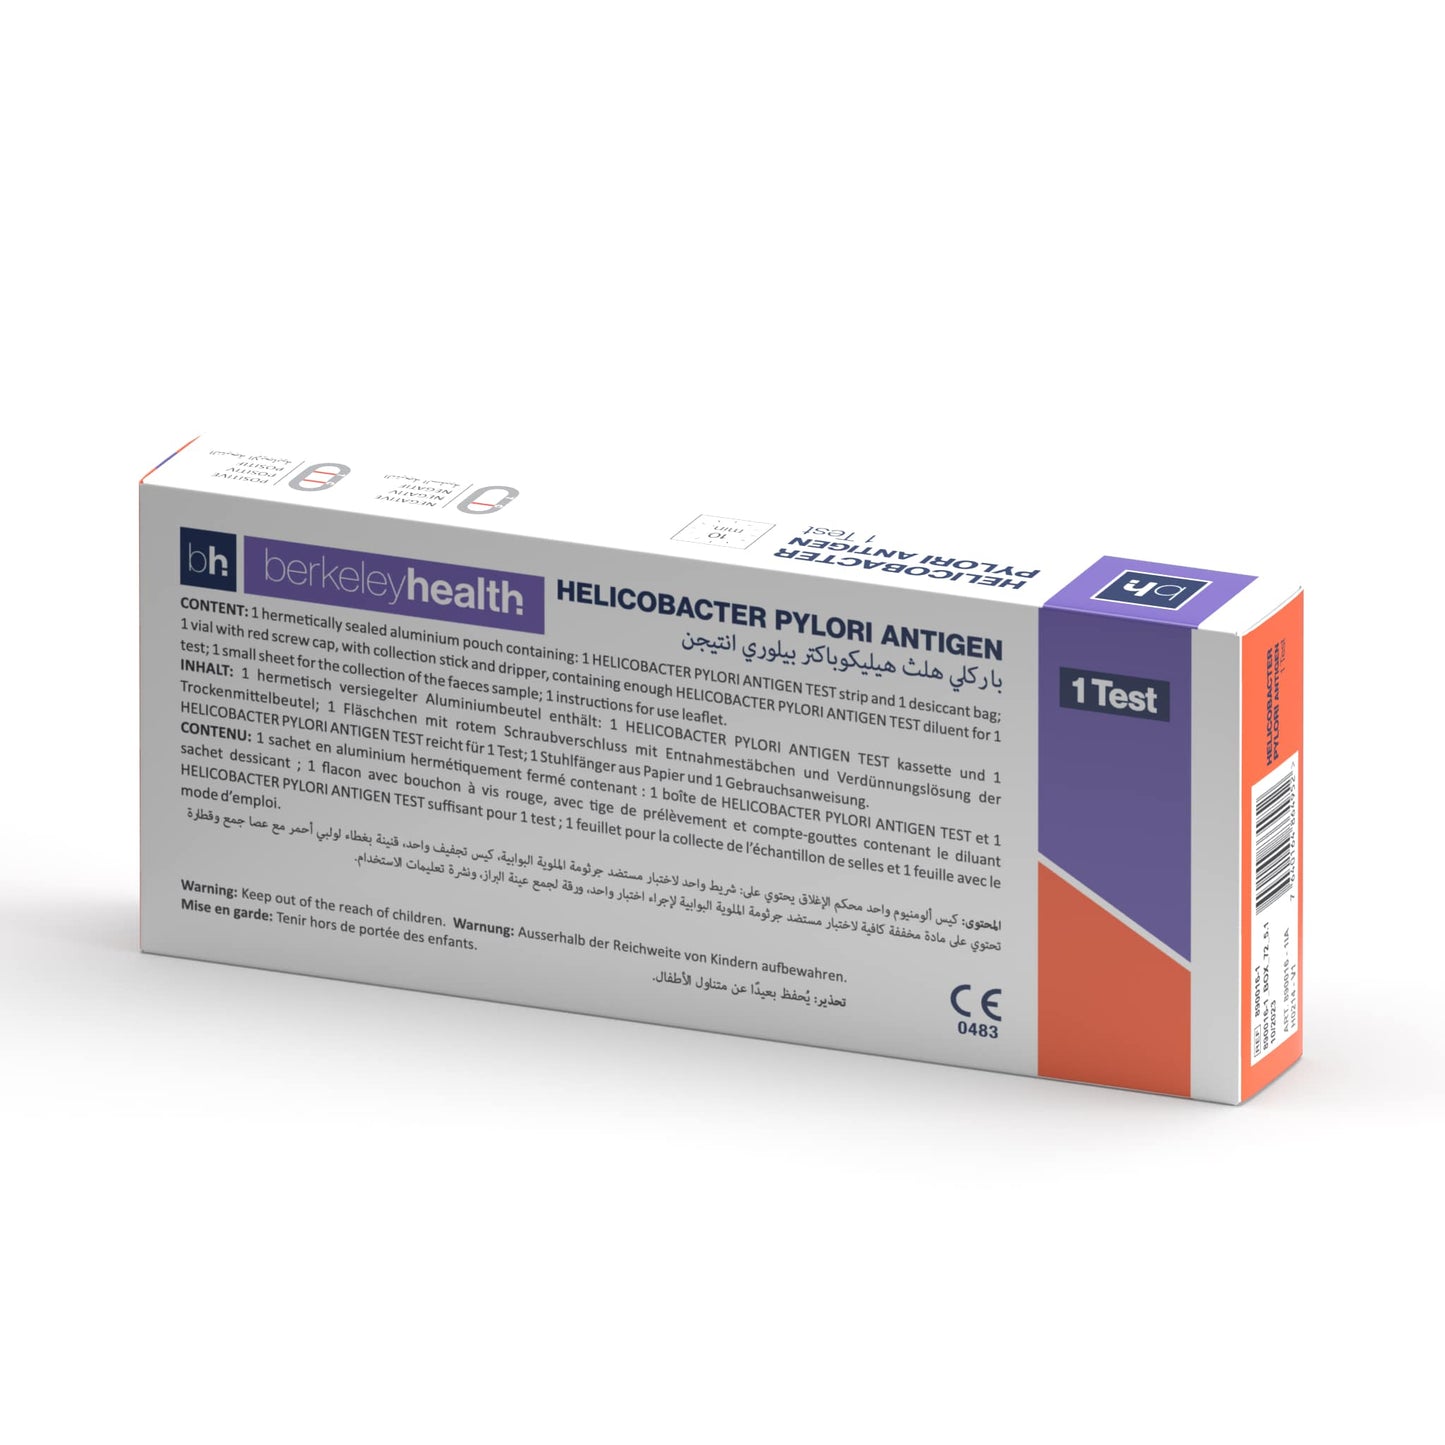 berkeleyhealth Helicobacter pylori Antigen Rapid test (Self Testing Use)